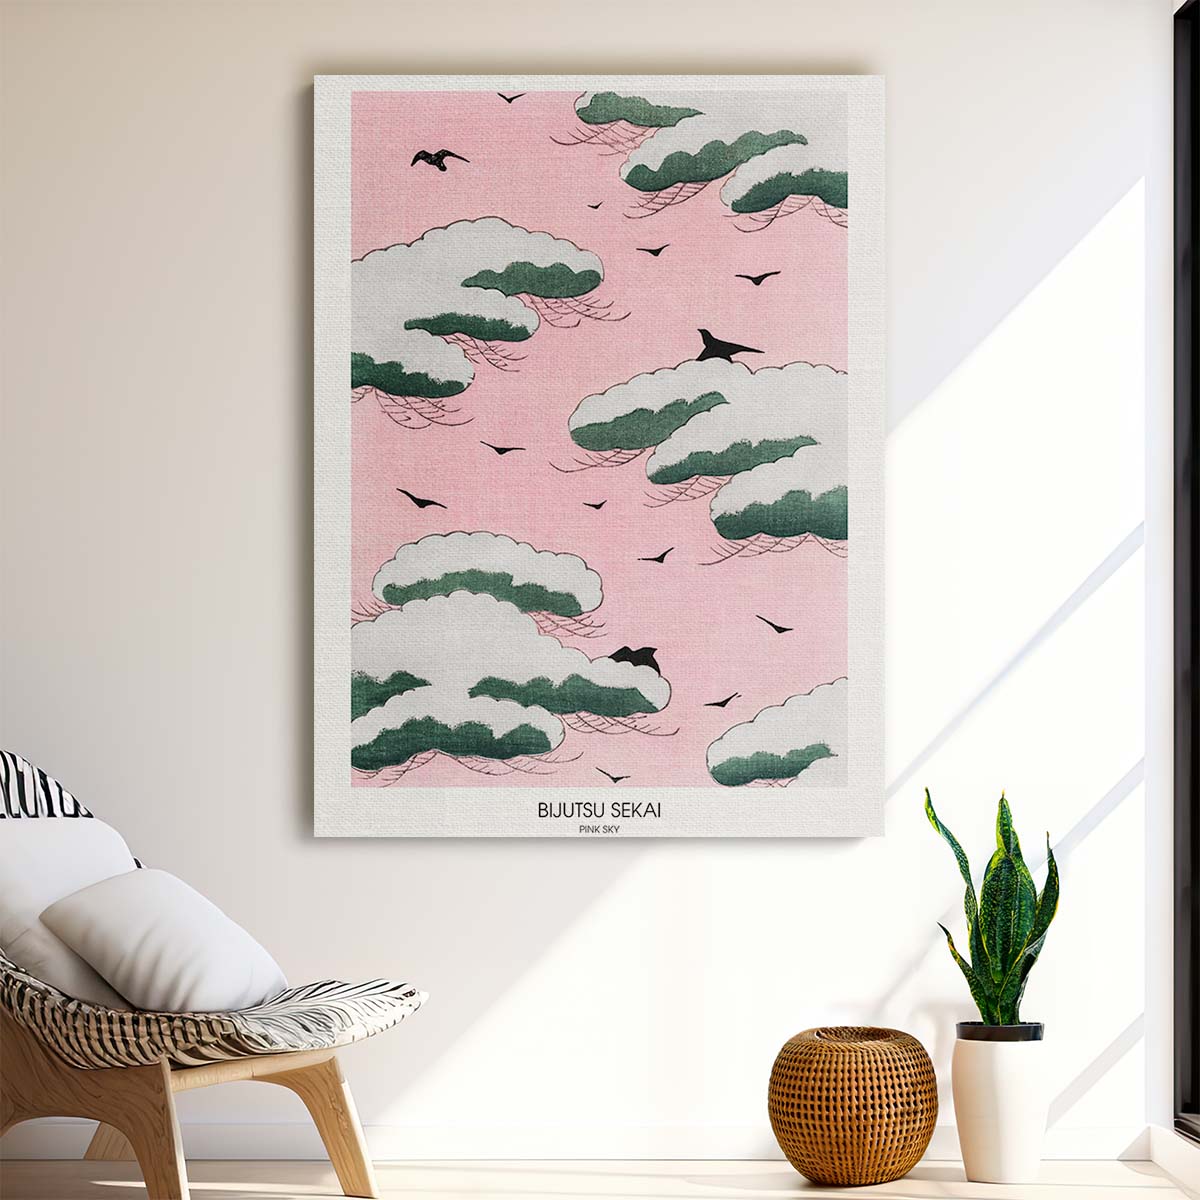 Vintage Pink Sky Illustration Poster by Bijutsu Sekai, Ukiyo-e Style by Luxuriance Designs, made in USA